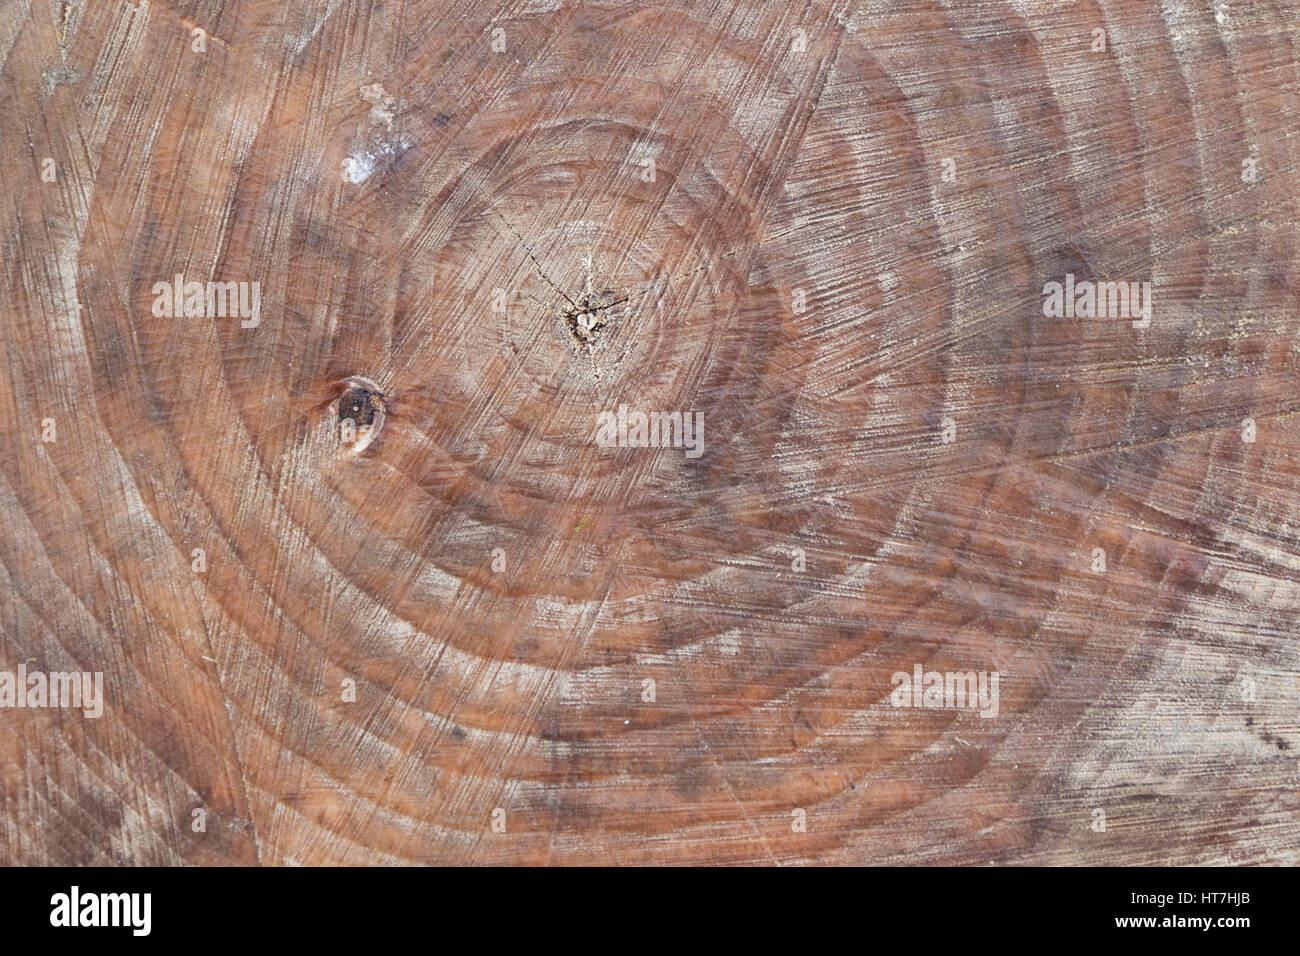 Nature: Tree rings on tree stump. Stock Photo